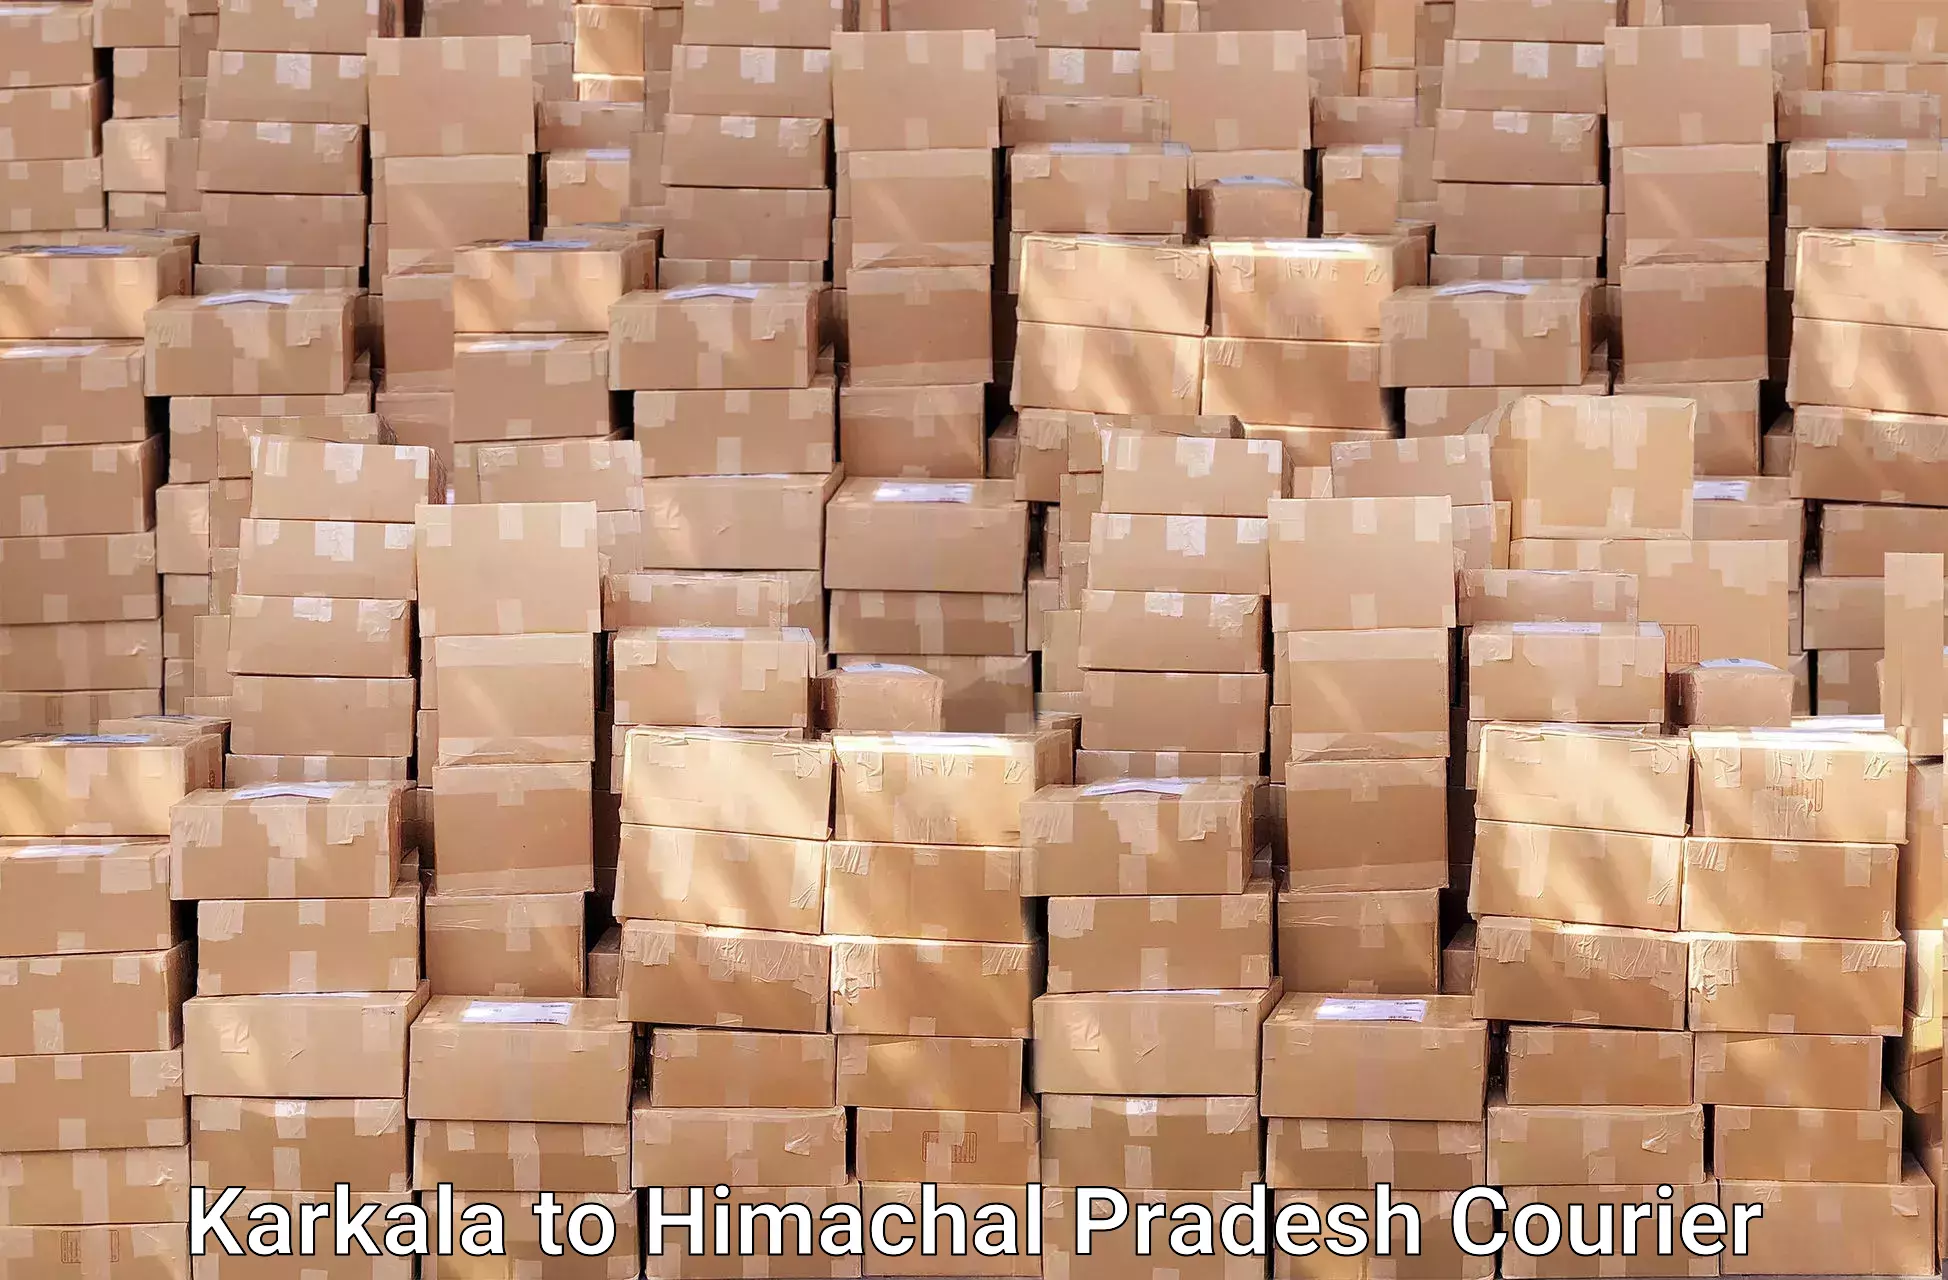 Professional moving company Karkala to Himachal Pradesh